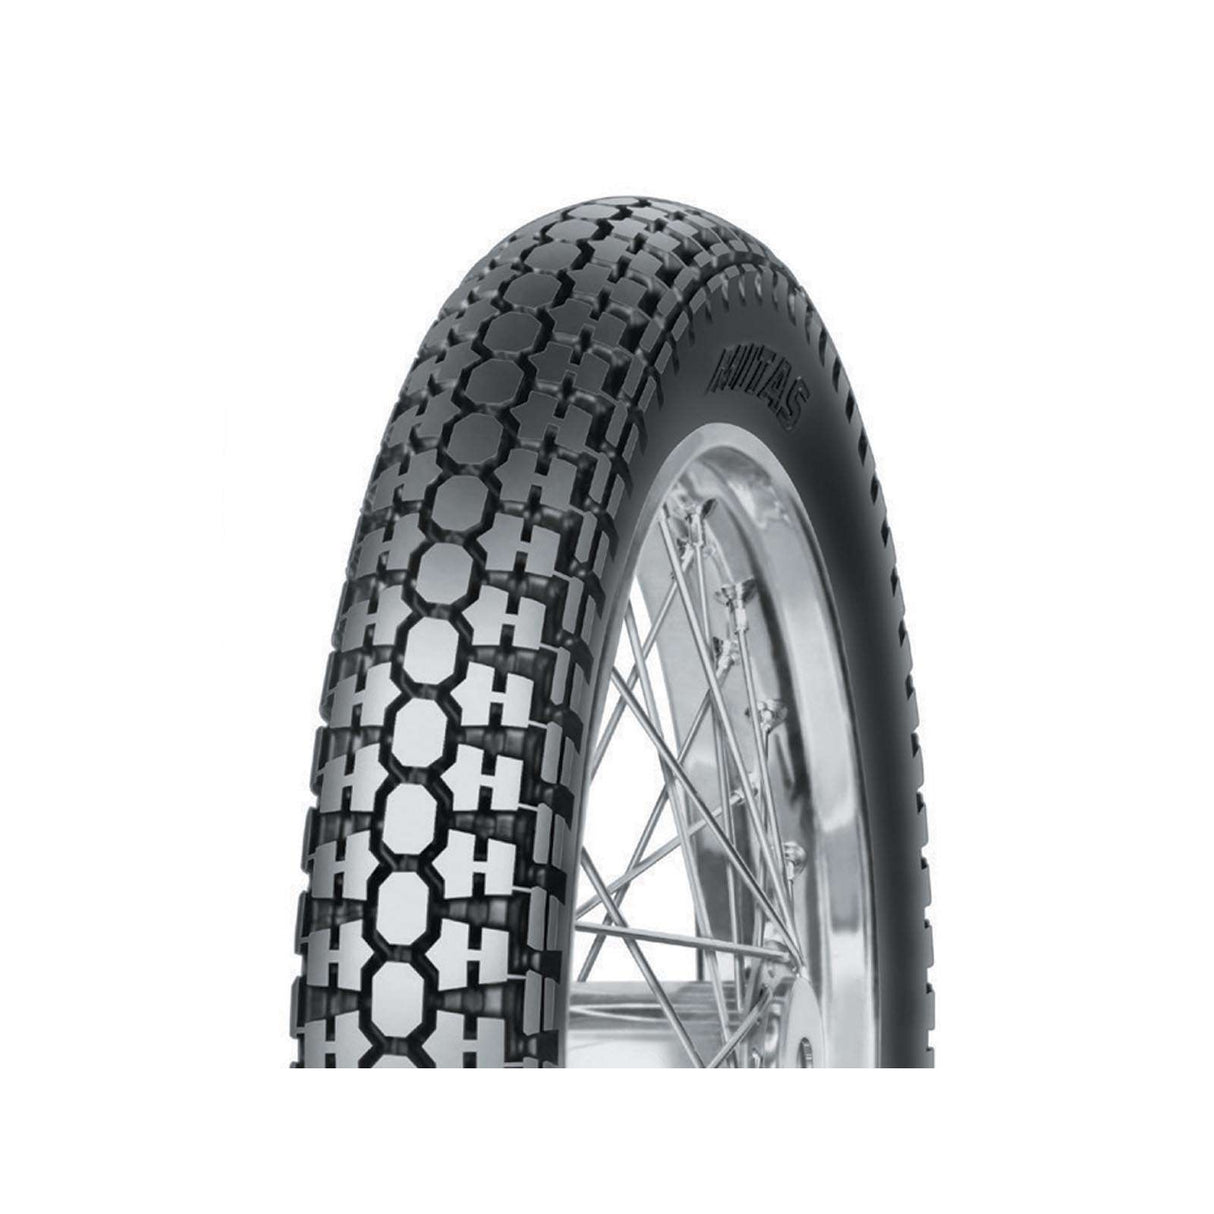 3.00-19 H02 Classic Mitas Highway Tyre